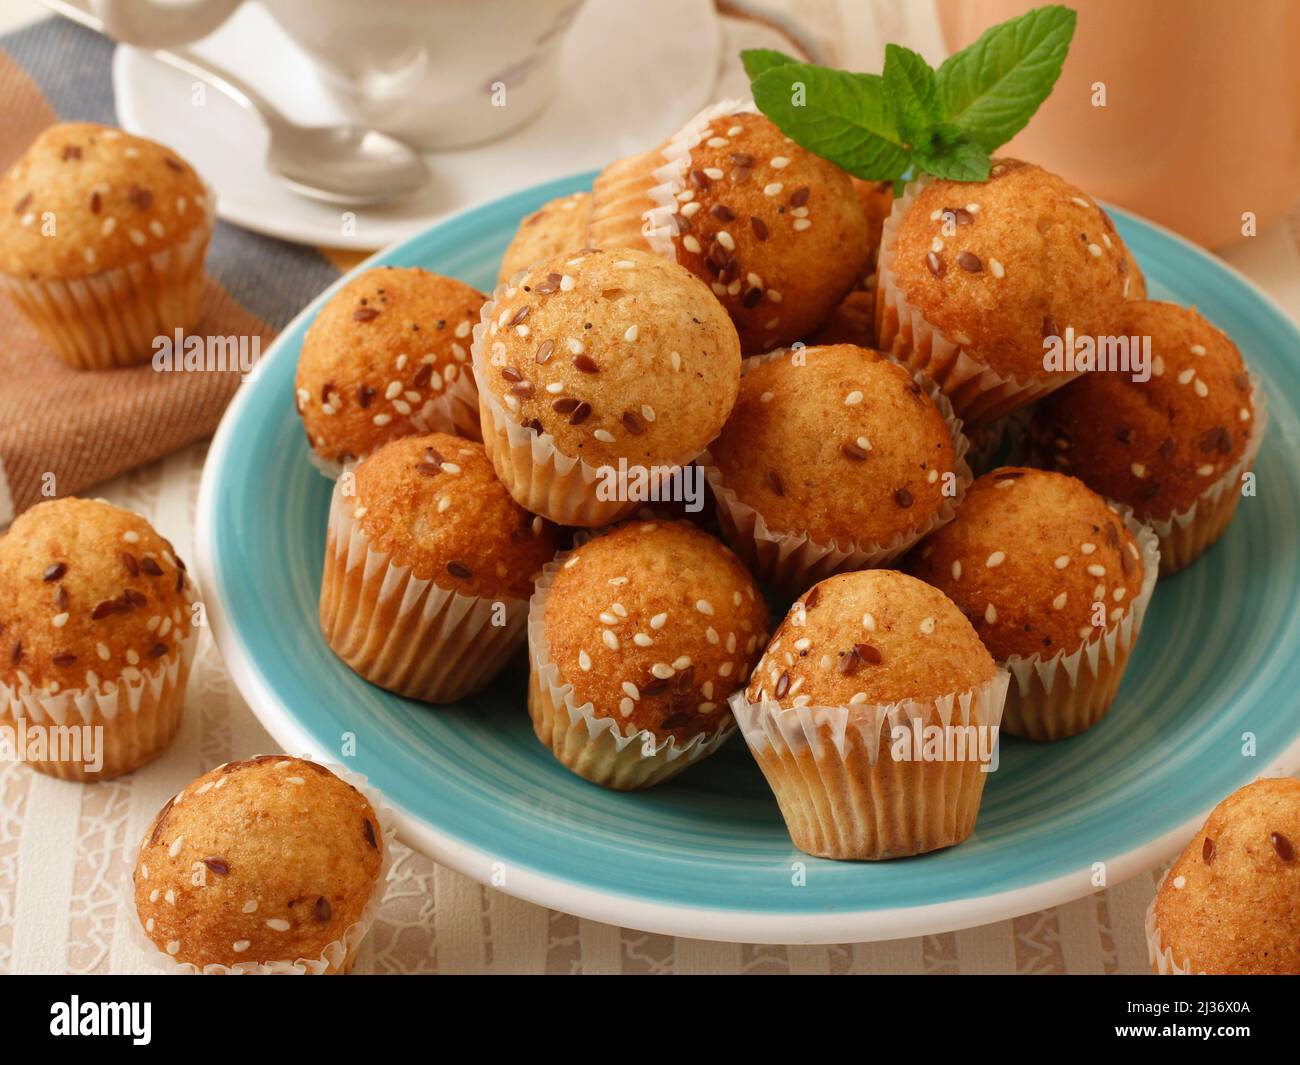 Mini cupcakes with seeds. Stock Photo